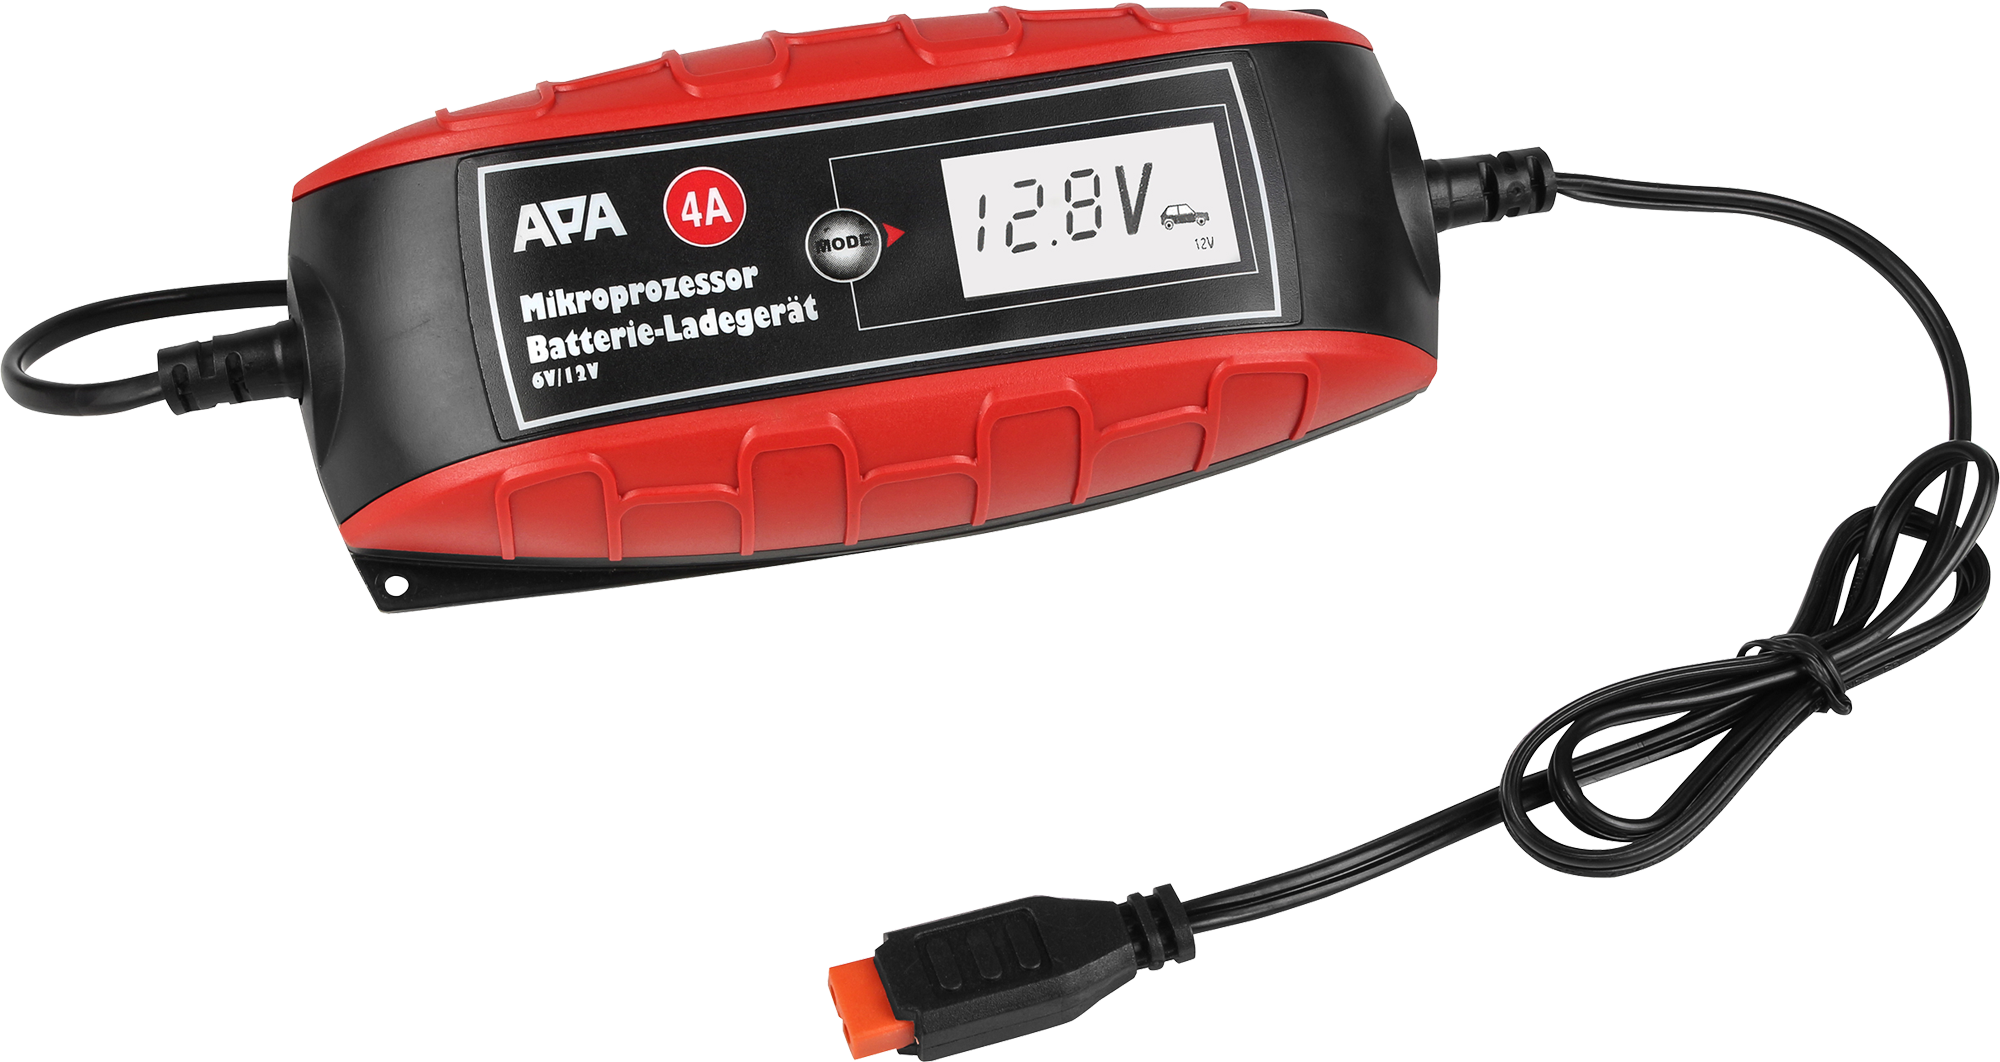 Apa Mikroprozessor Batterie-Ladegerät, 9-stufig, Ladeerhaltungsfunktion, 6/12V, 4A